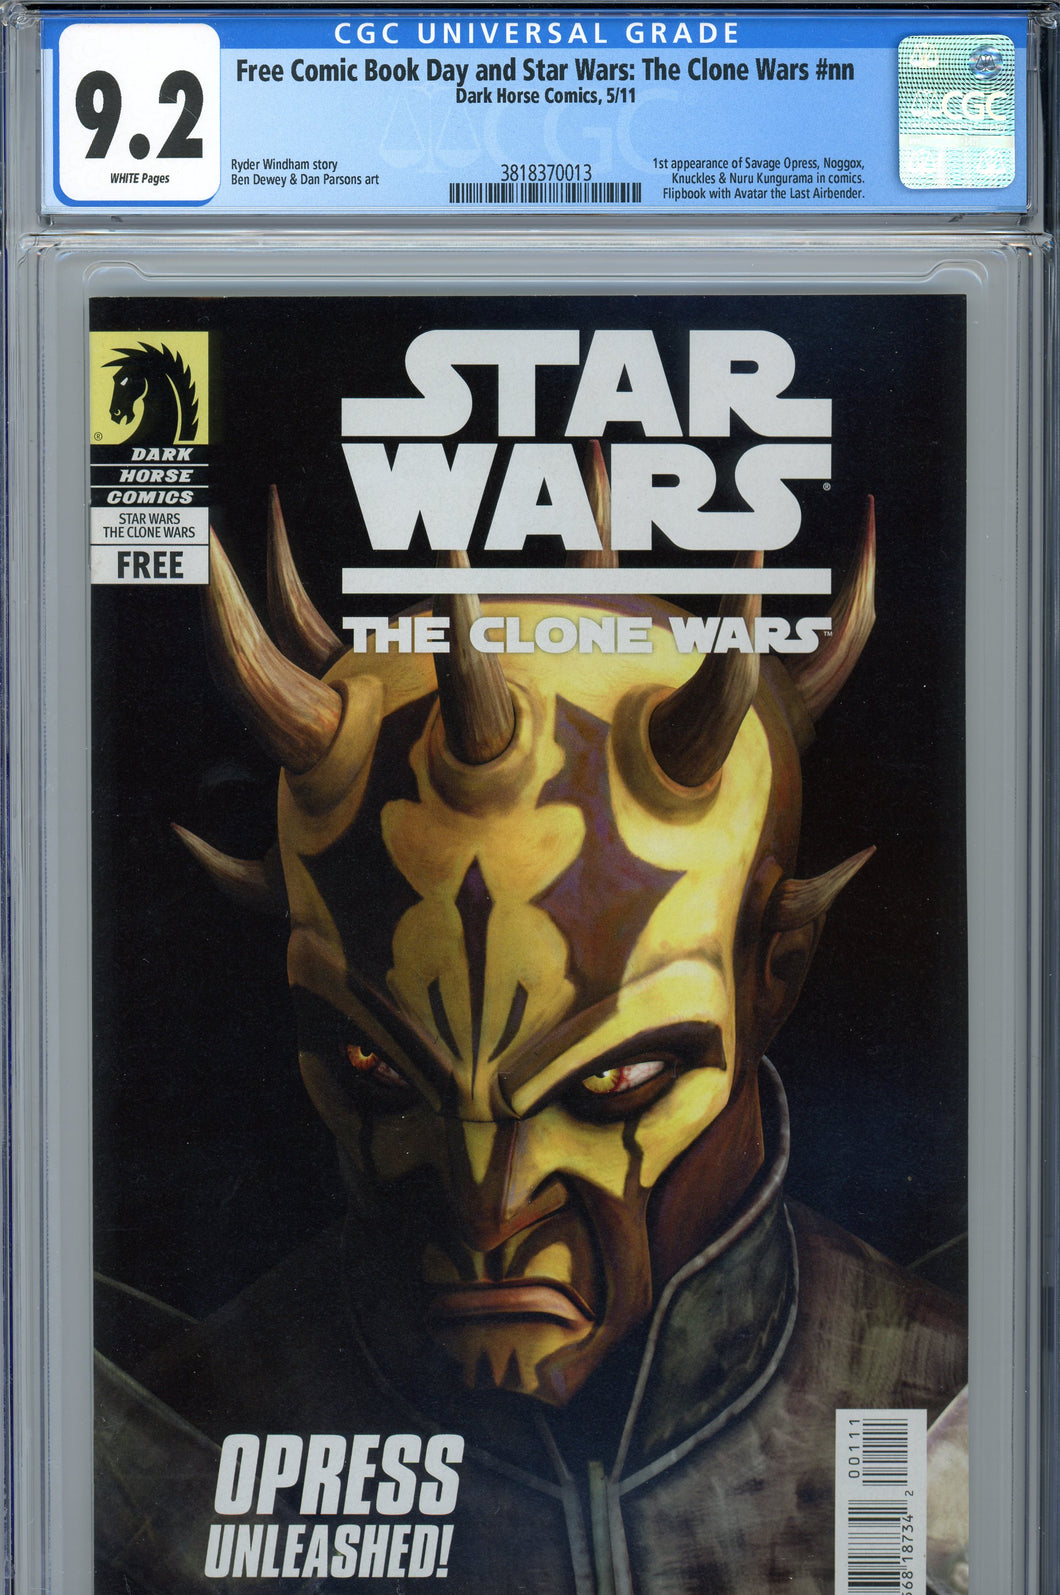 Free Comic Book Day Star Wars: The Clone Wars CGC 9.2